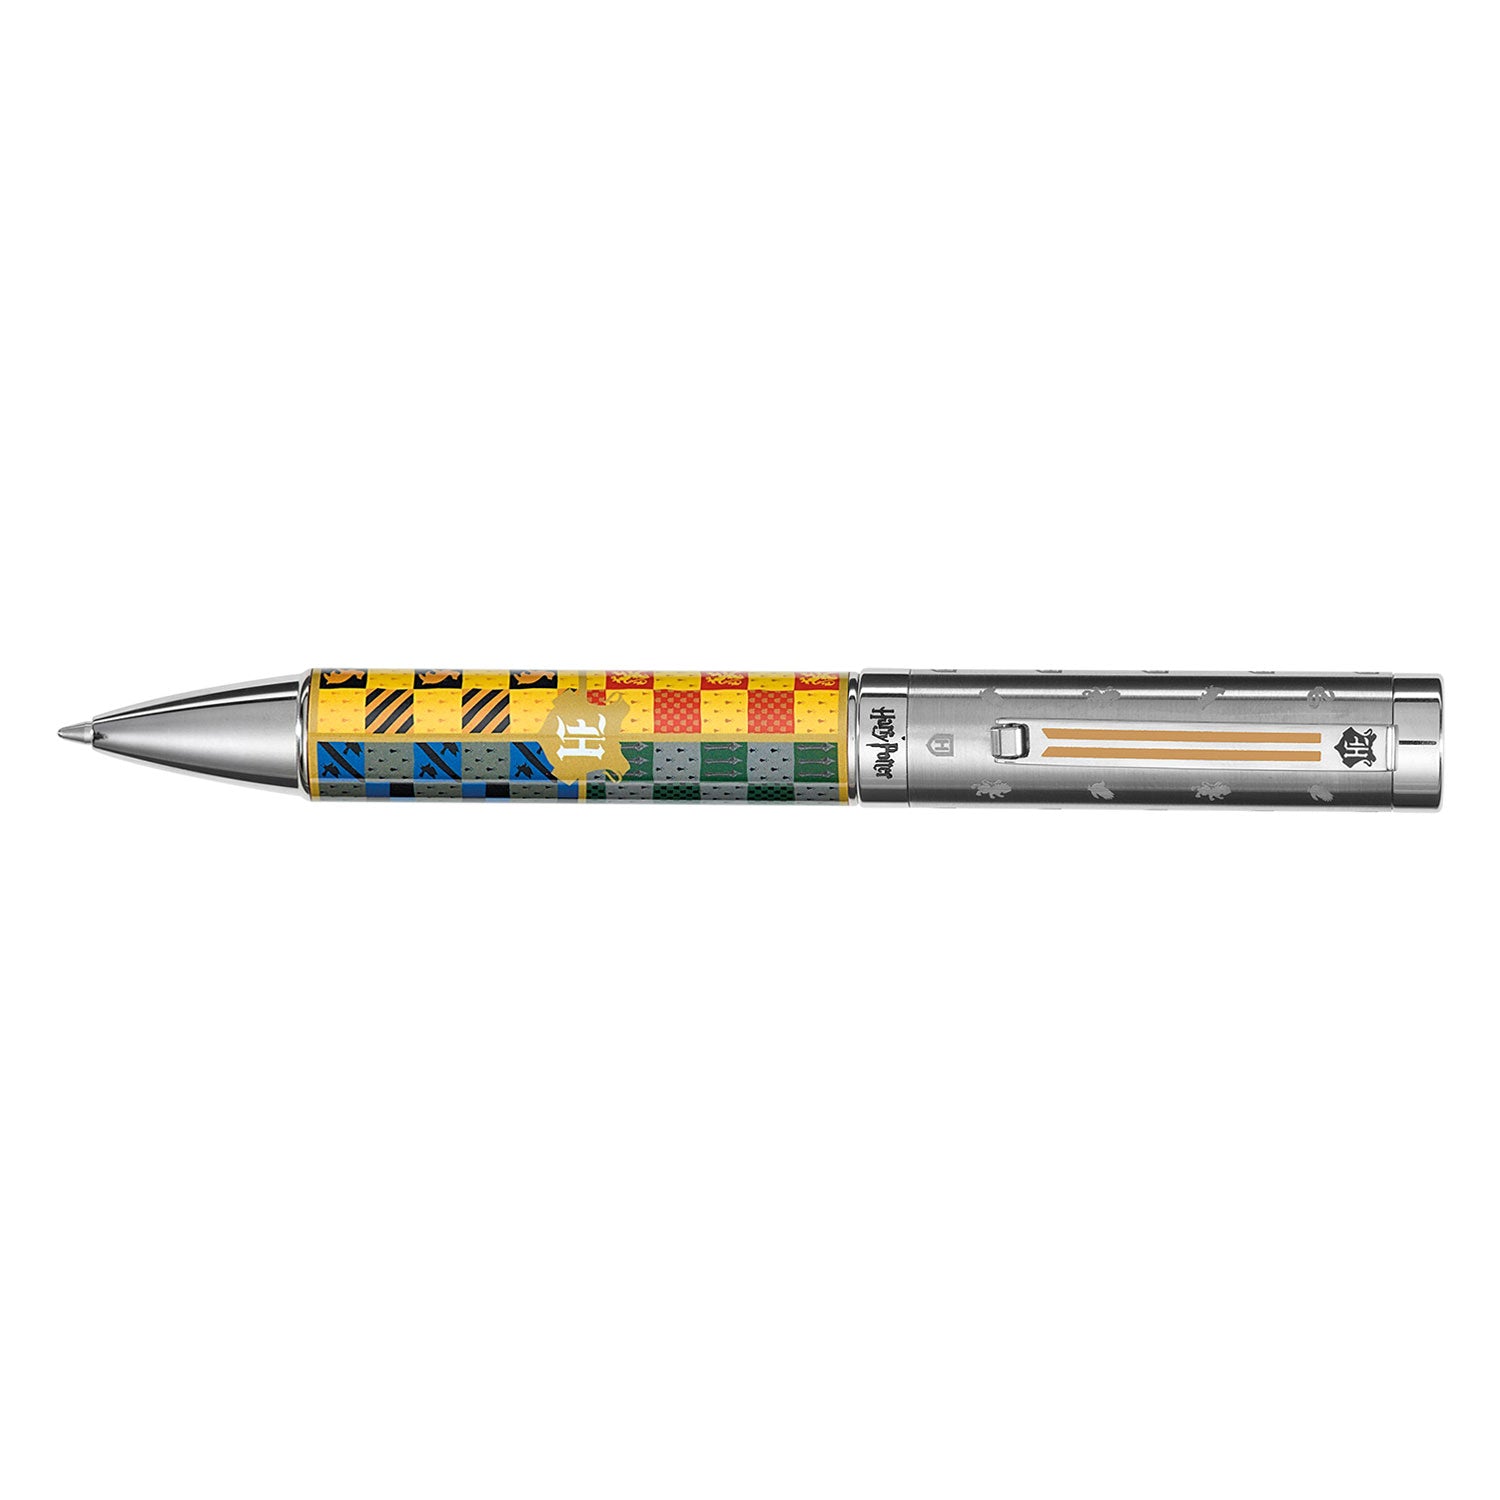  HARRY POTTER 4-Pack Ball Pen Set B, Multicolor, 1